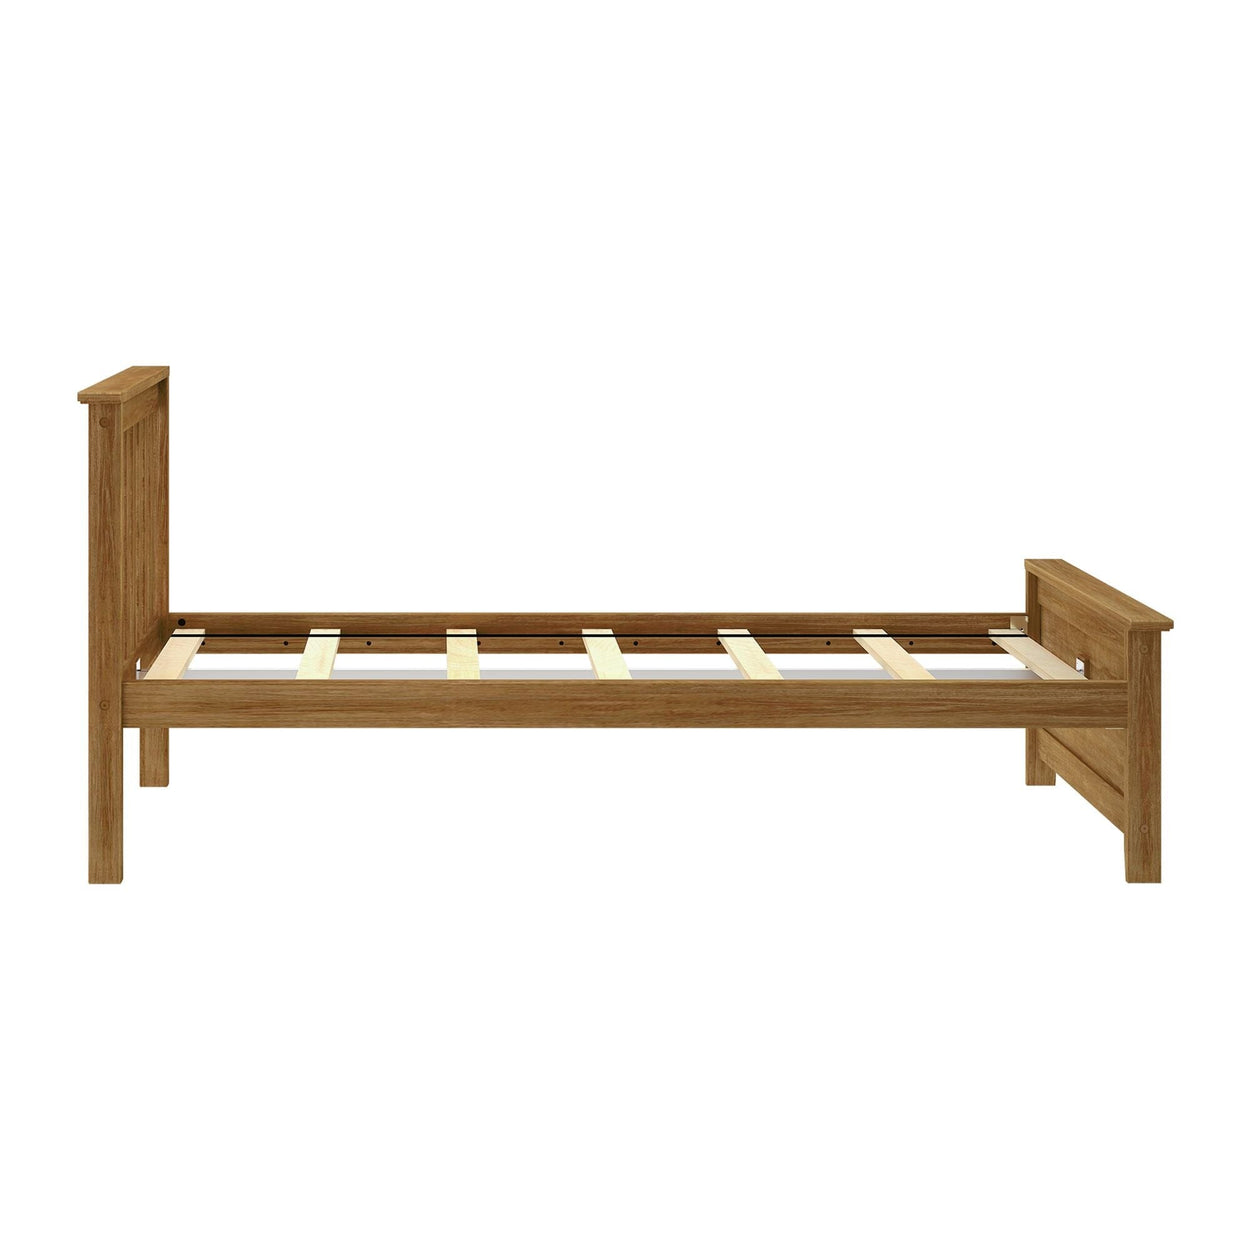 180210-007 : Kids Beds Classic Twin-Size Platform Bed, Pecan